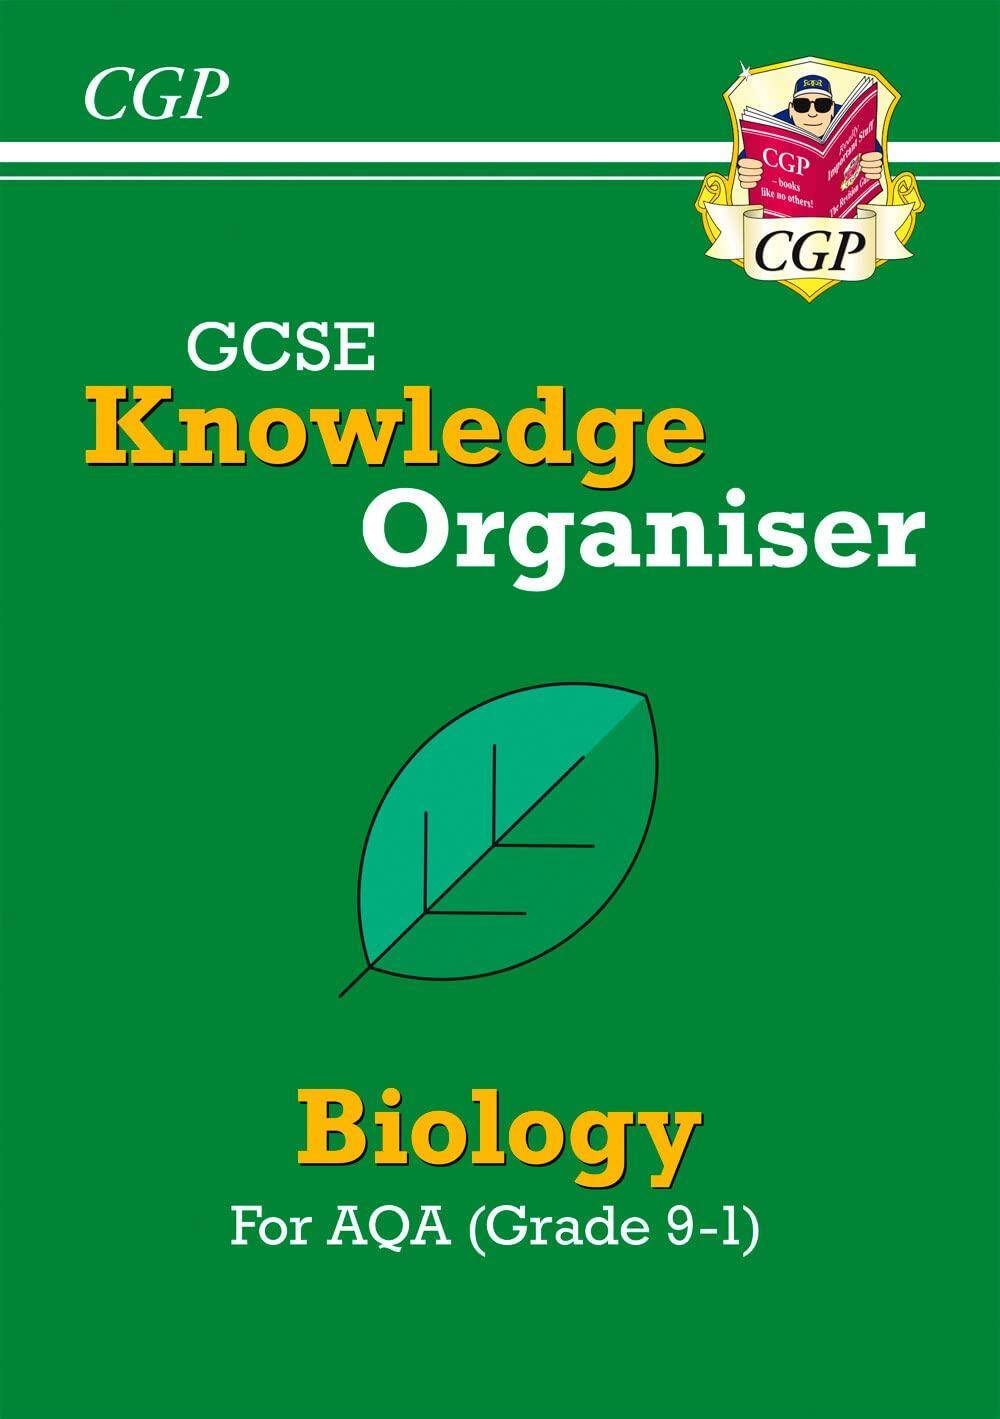 GCSE Biology AQA Knowledge Organiser